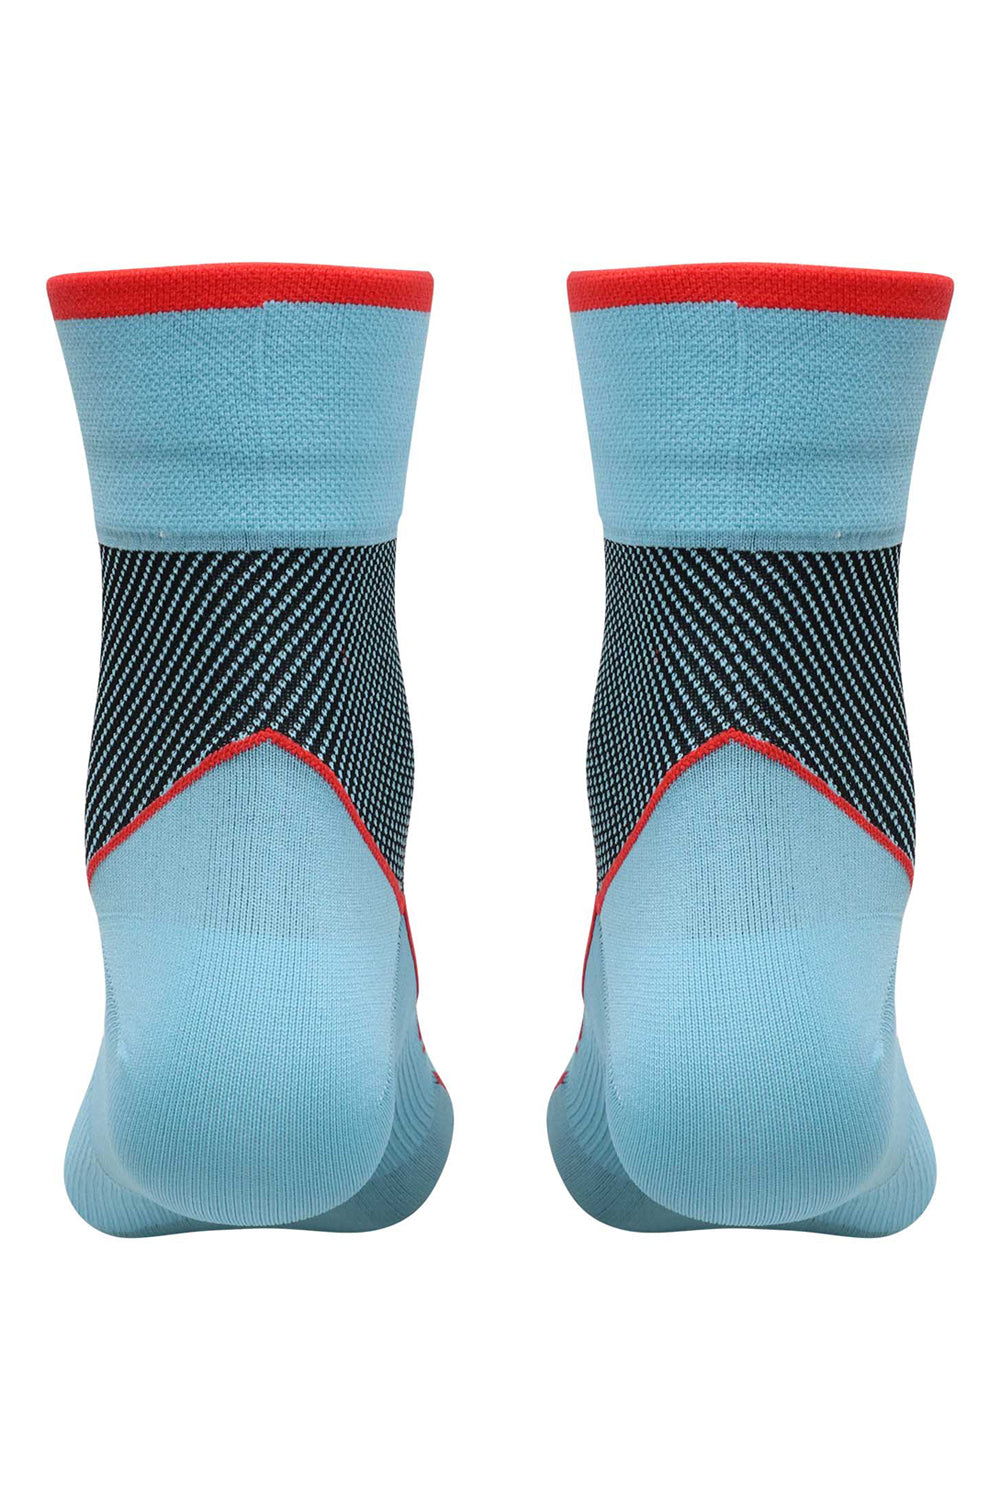 Sundried Blue Cycle Socks S21 Socks Activewear